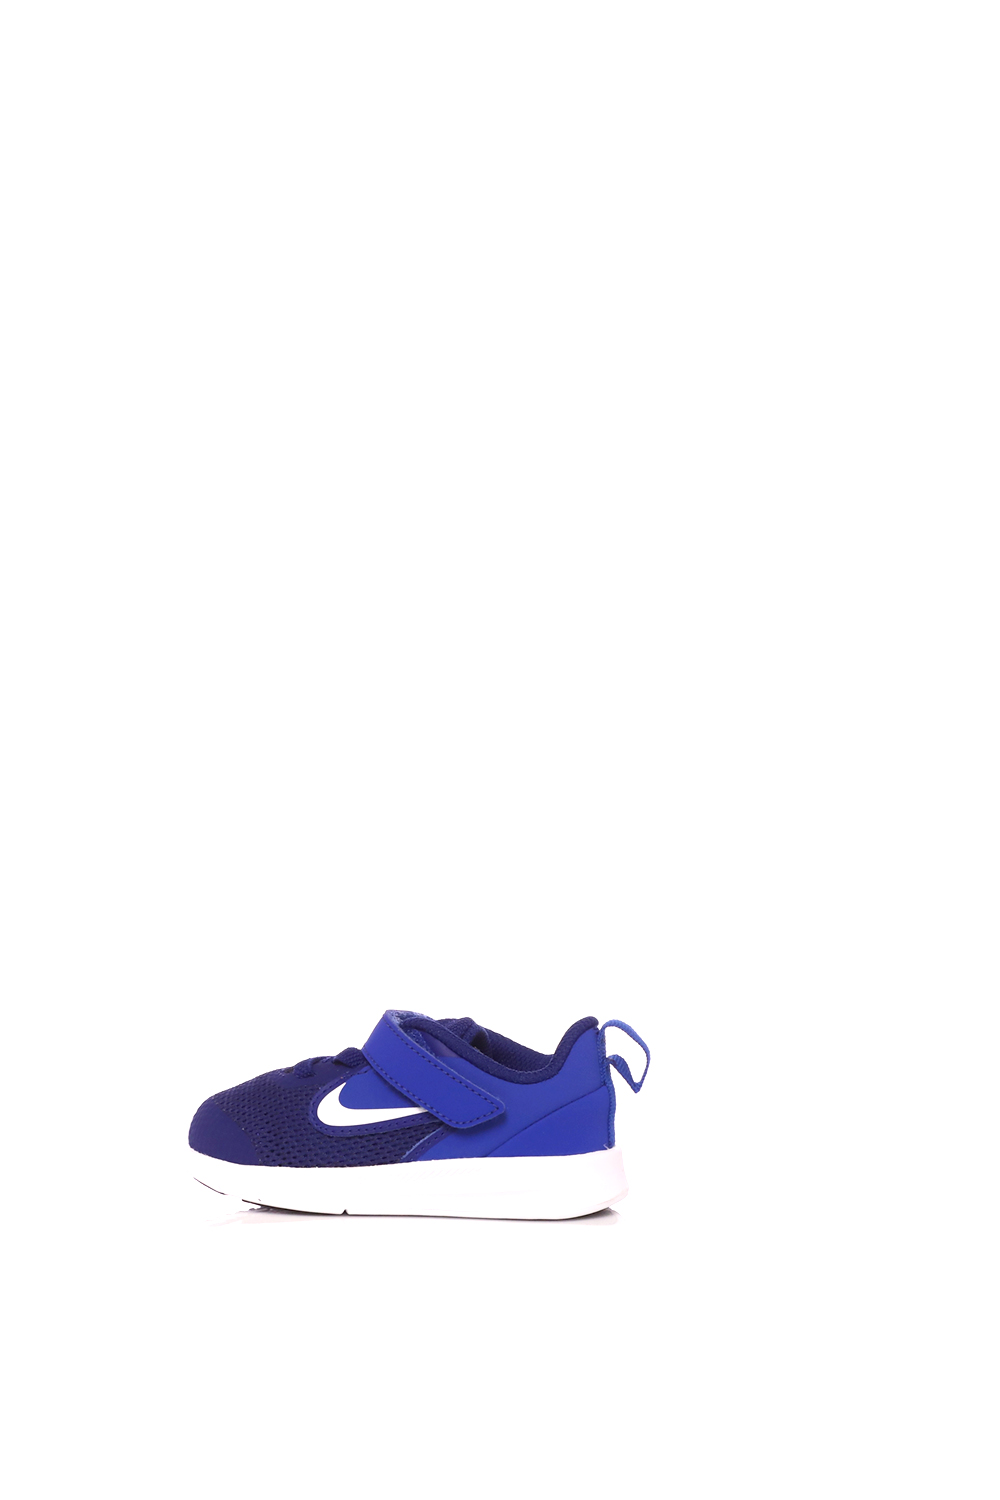 NIKE - Βρεφικά αθλητικά παπούτσια NIKE DOWNSHIFTER 9 μπλε Παιδικά/Baby/Παπούτσια/Αθλητικά